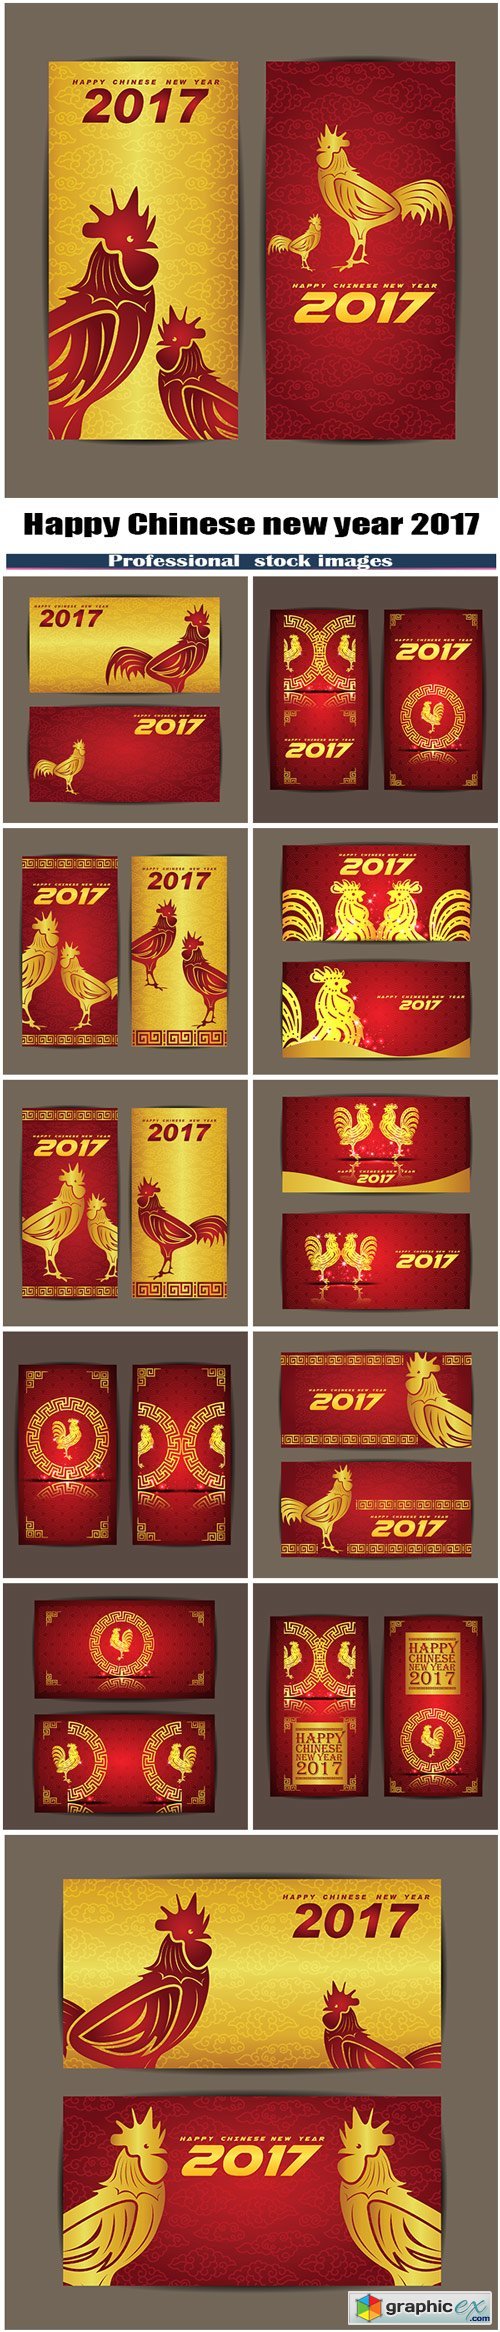 Happy Chinese new year 2017